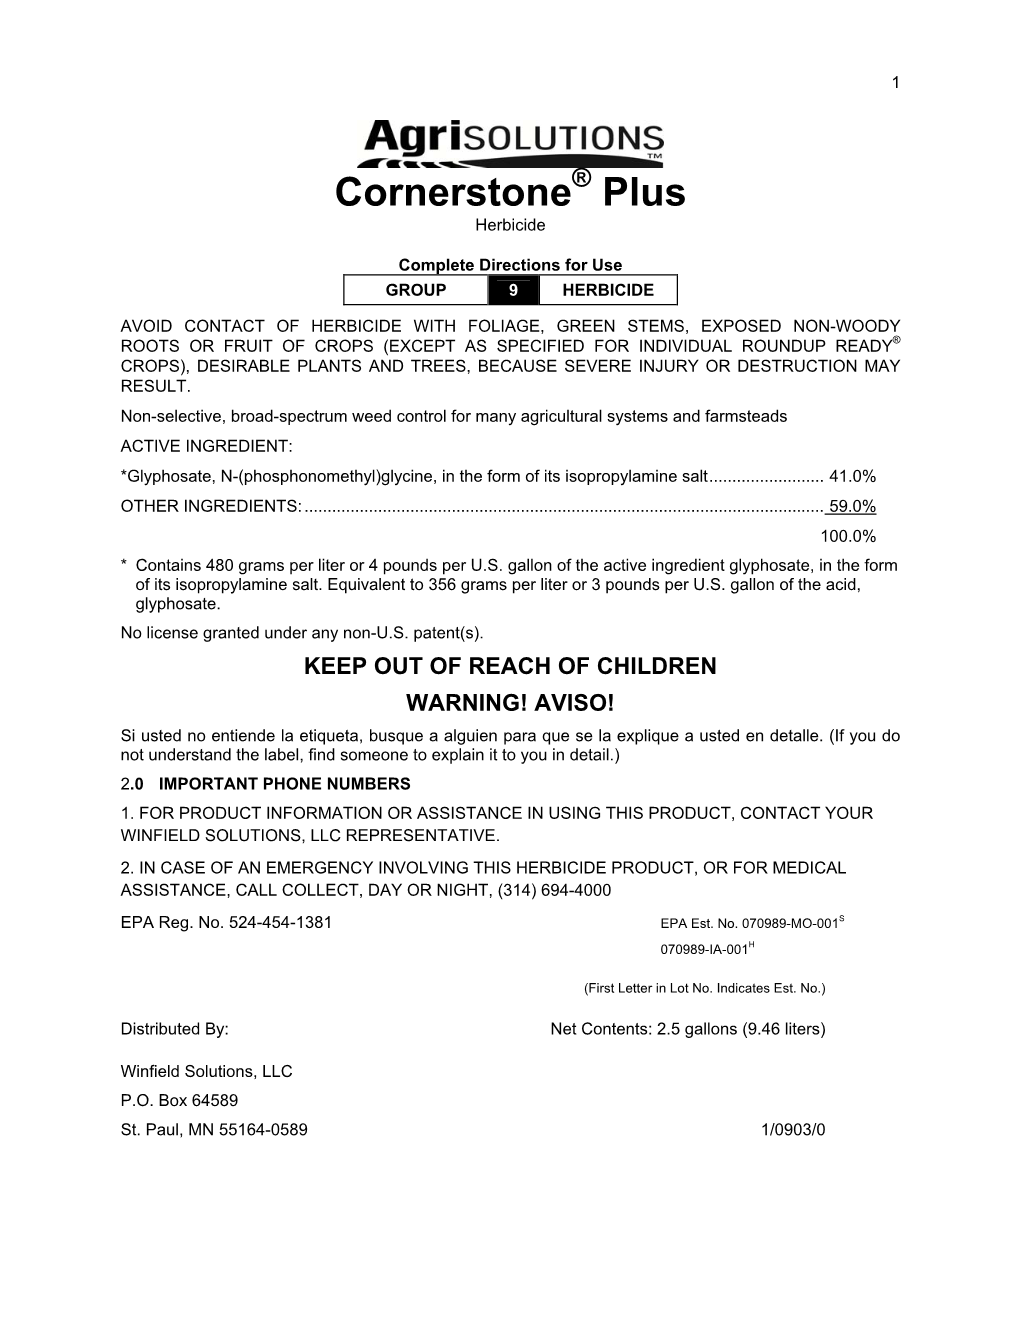 Cornerstone Plus, EPA Registration No